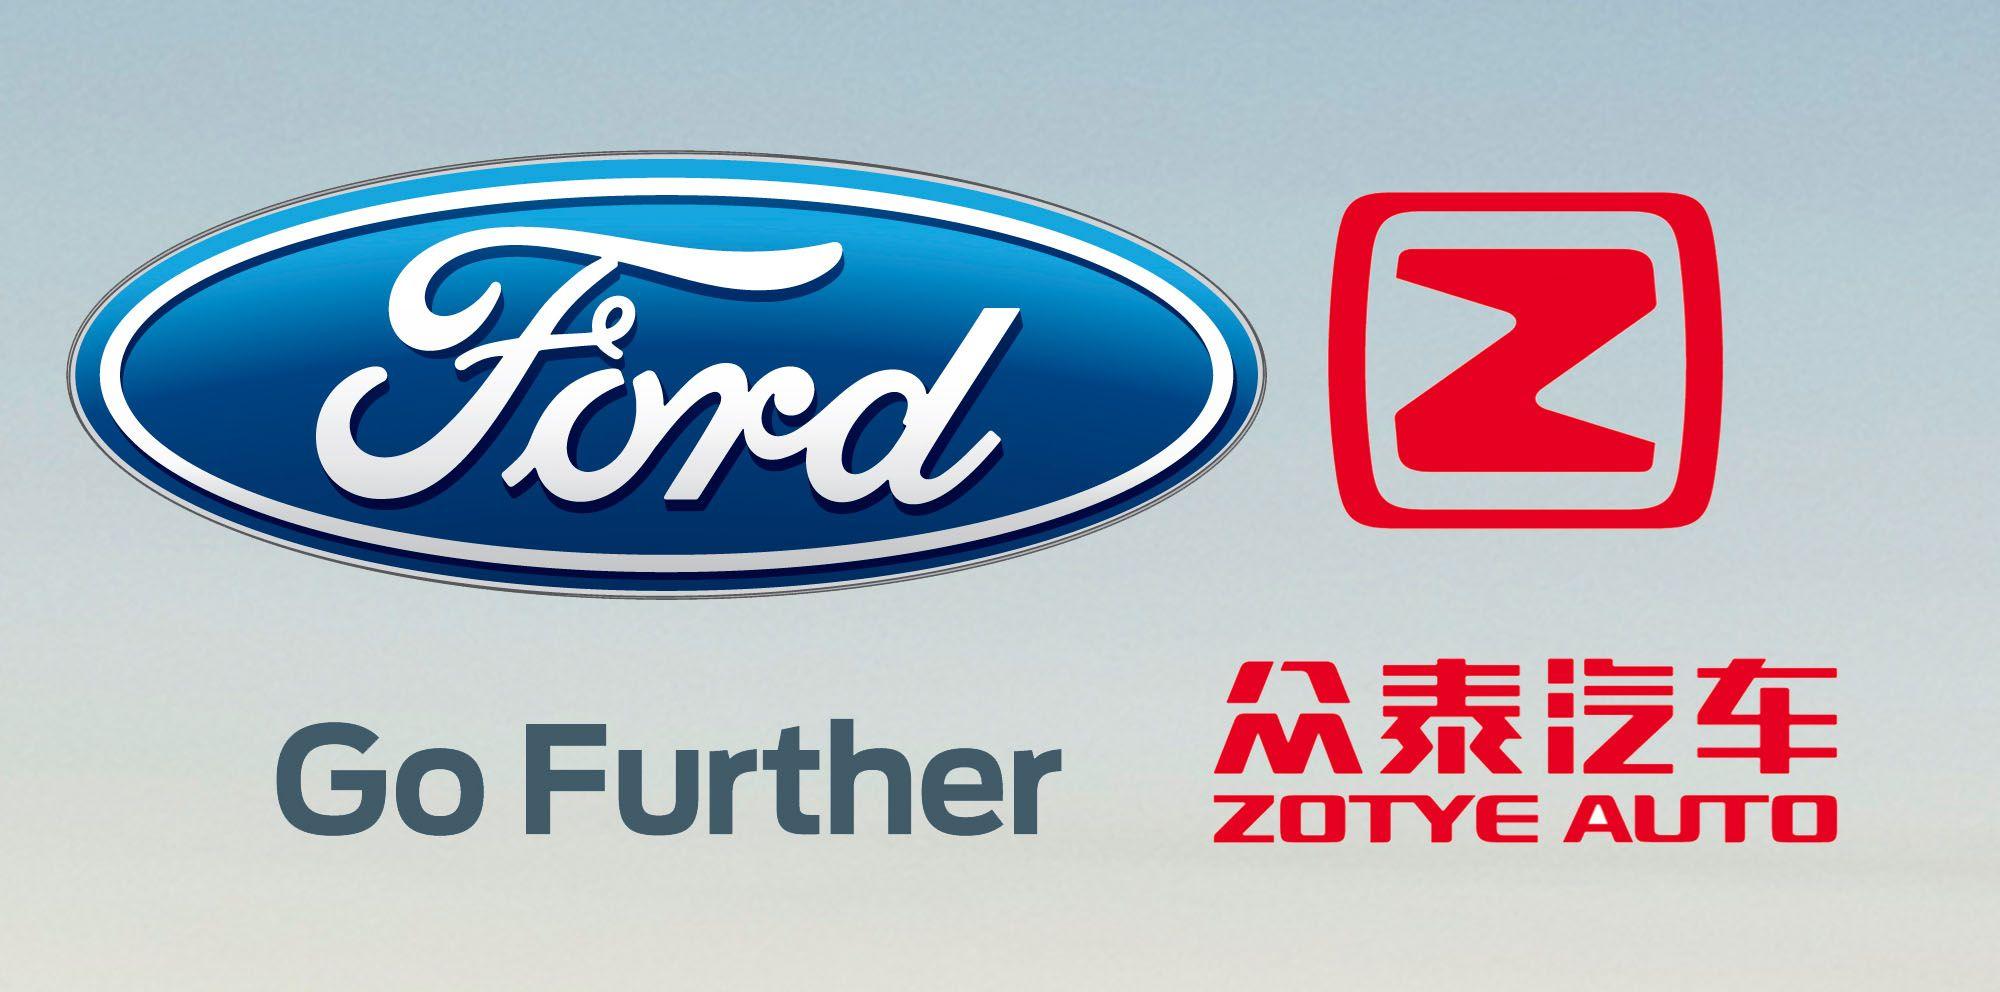 Zotye Logo - Ford, Zotye investigating joint venture EV brand for China | CarAdvice